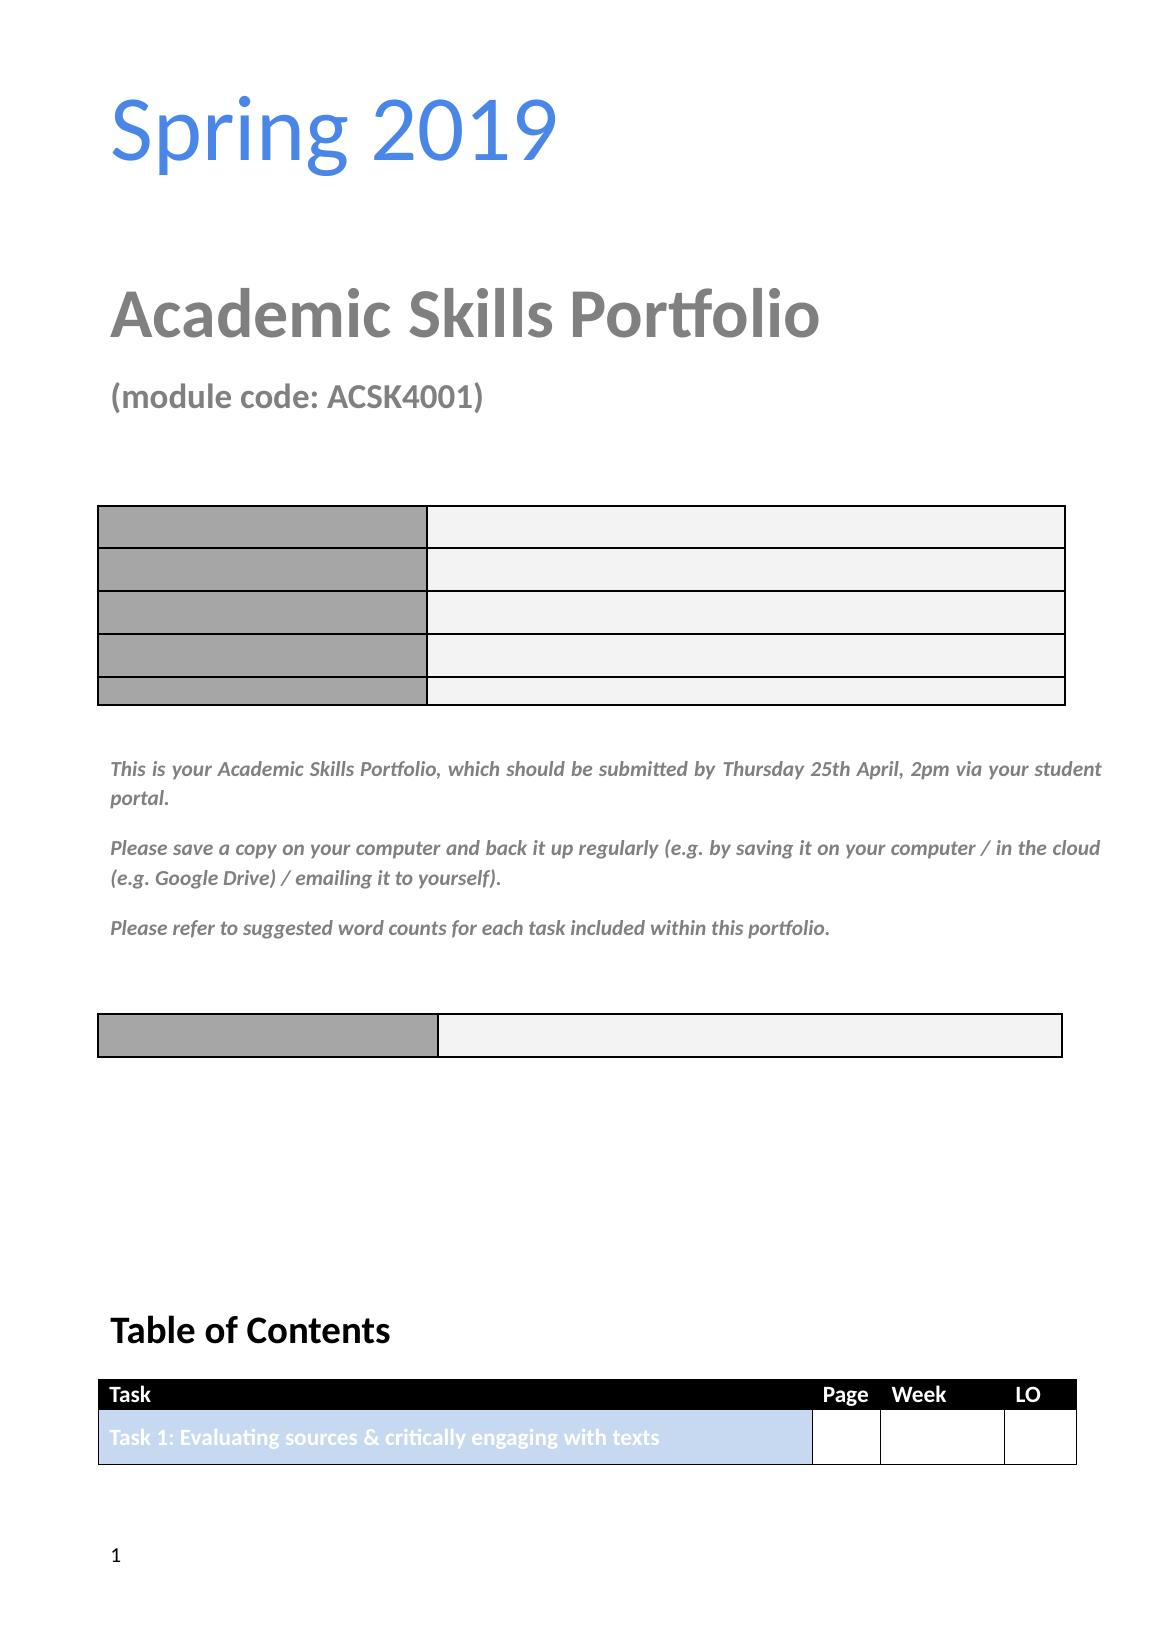 Spring 2019 Academic Skills Portfolio (module code: ACSK4001)_1